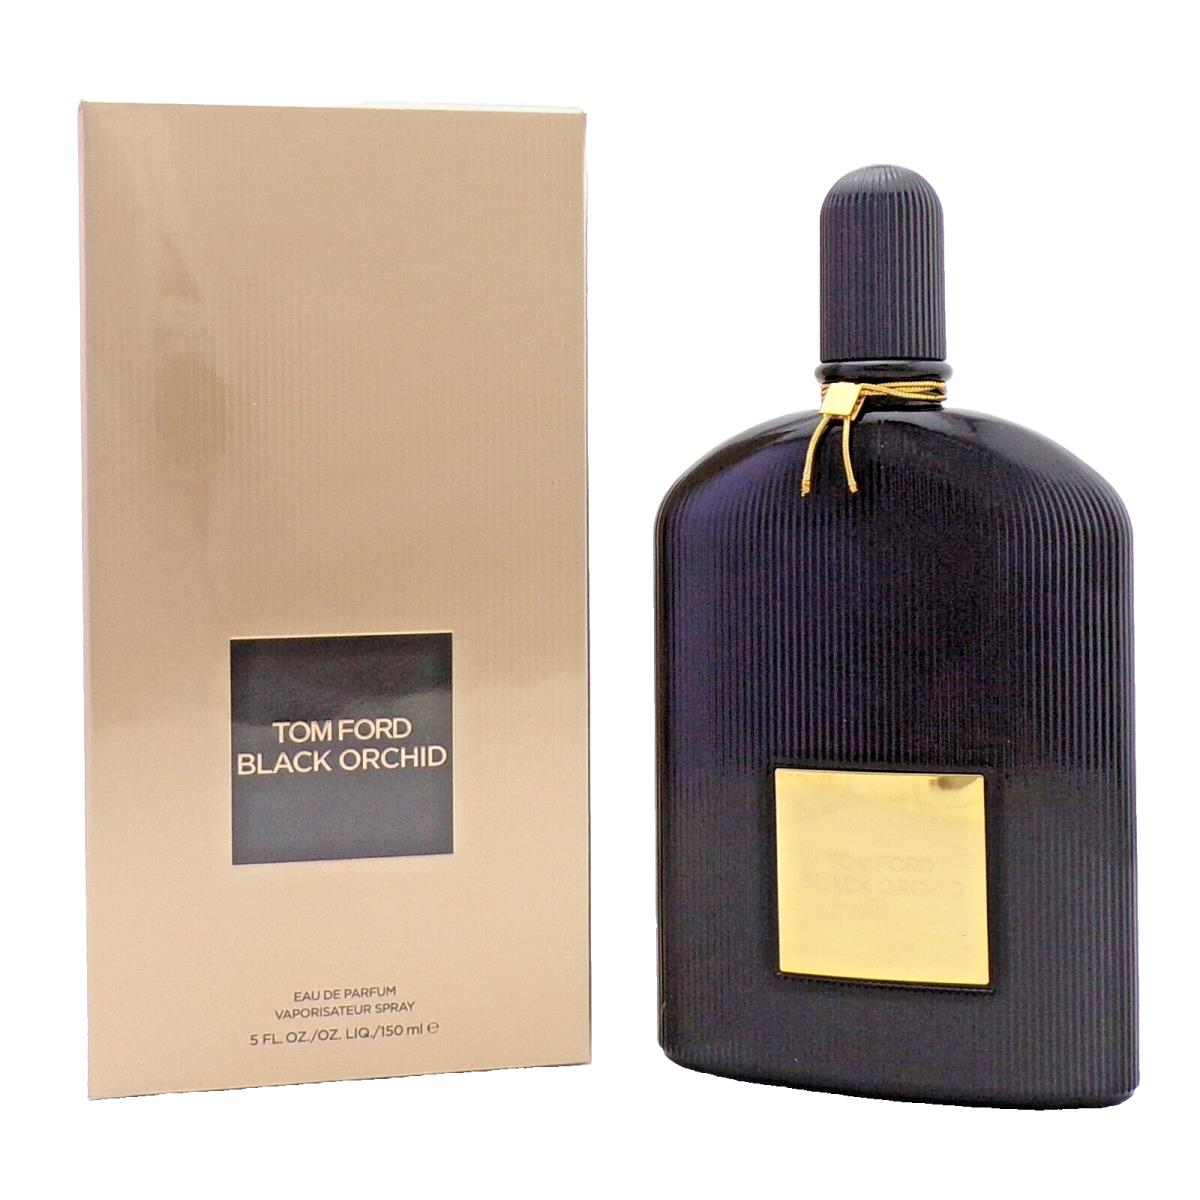 Black Orchid by Tom Ford 5.0 Oz. Eau de Parfum Spray For Women. Box